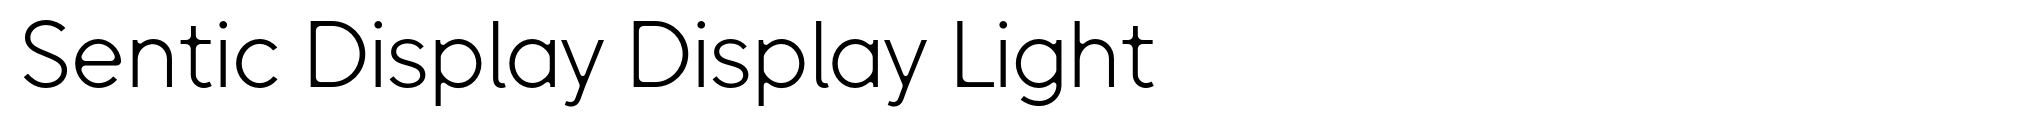 Sentic Display Display Light image